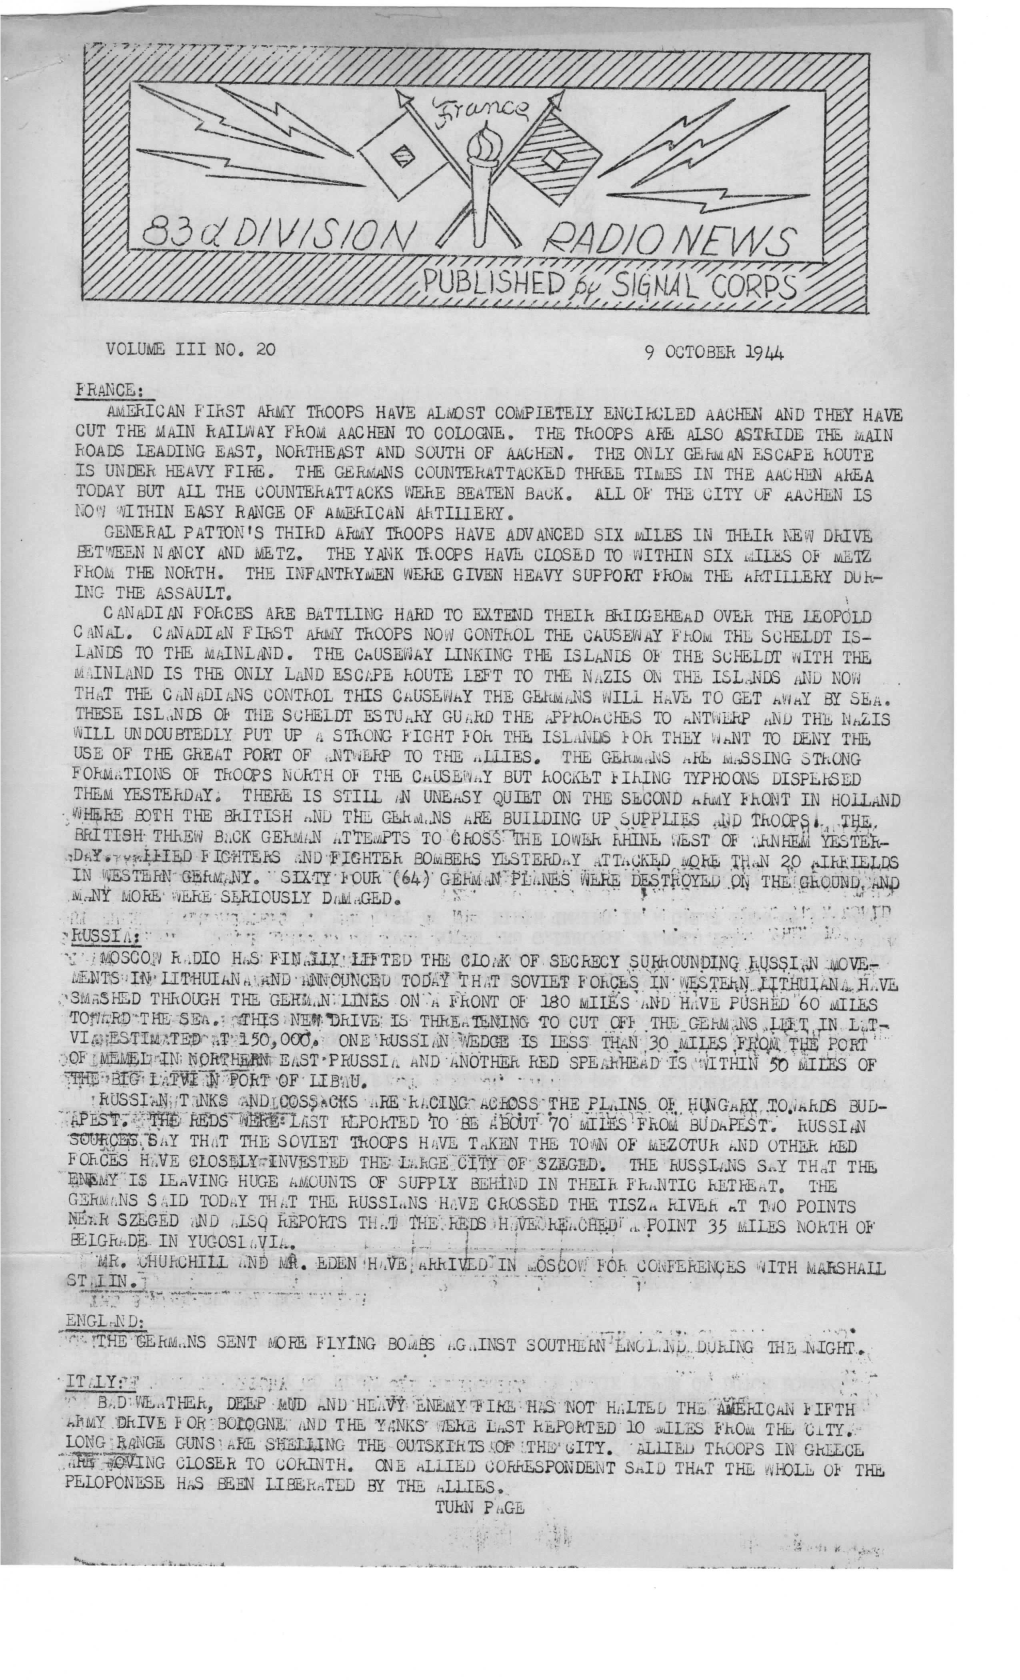 83Rd Division Radio News, France, Vol III #20, October 9, 1944